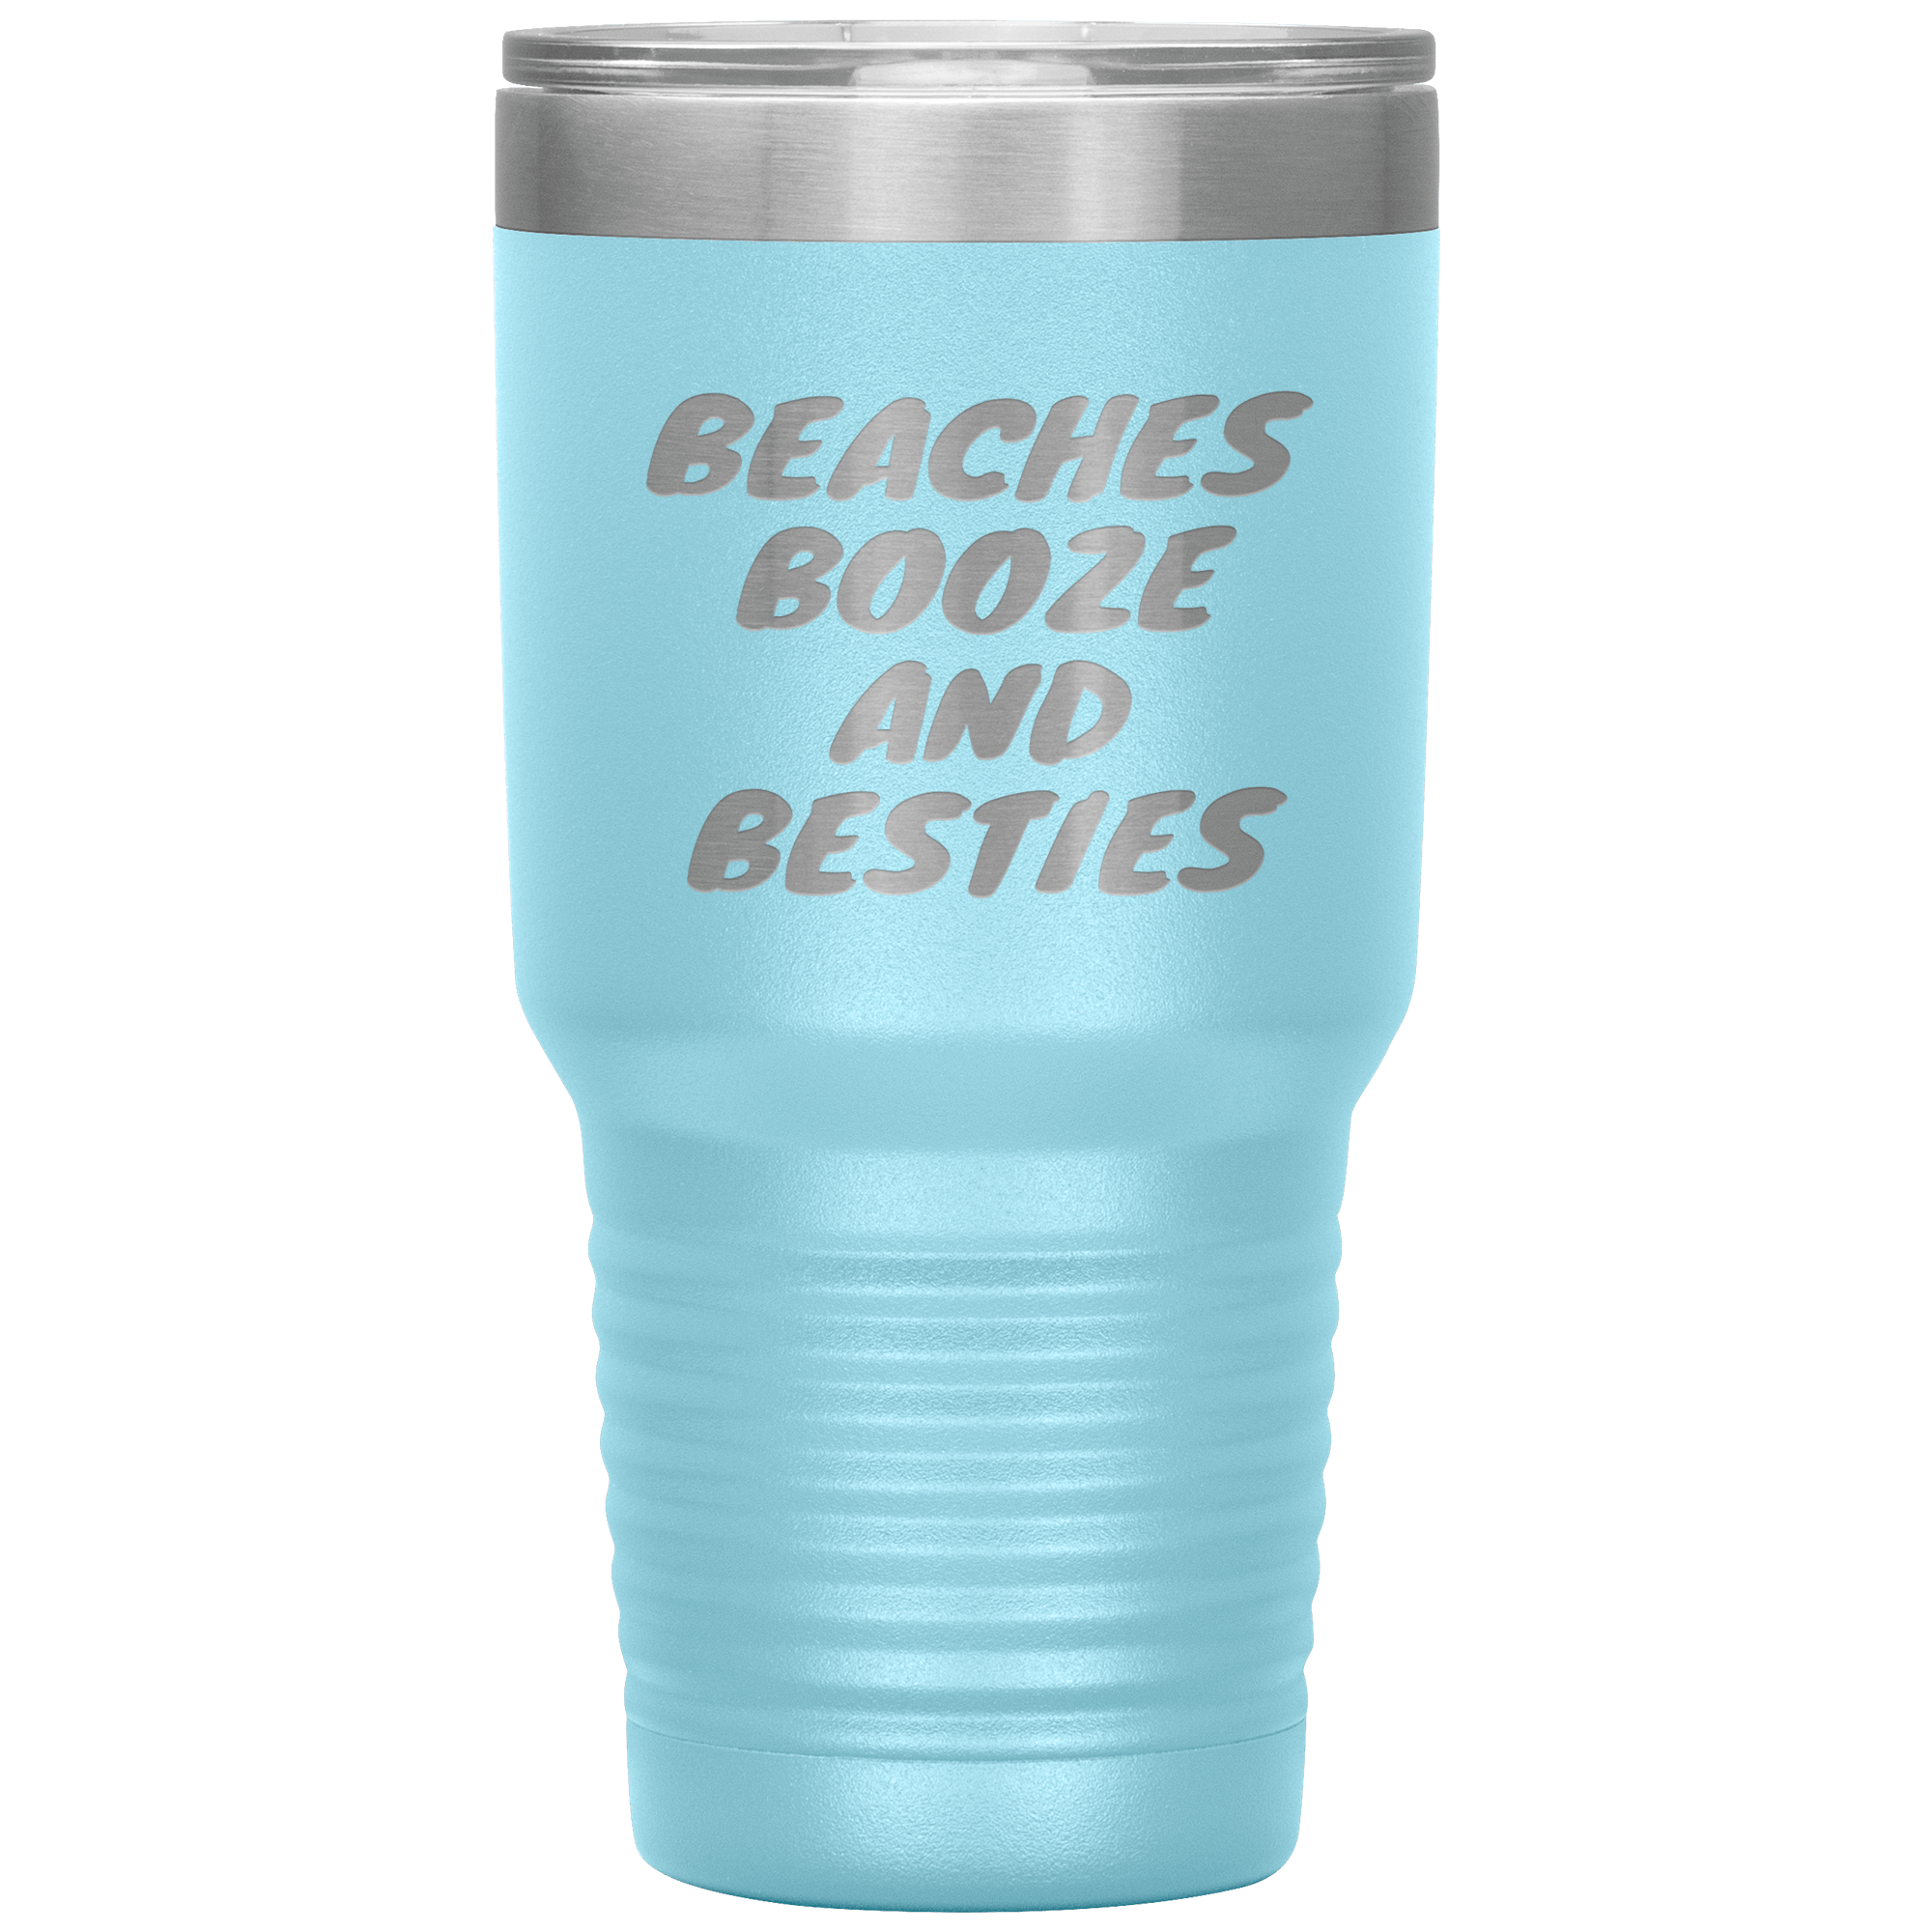 "Beaches Booze And Besties" Tumbler